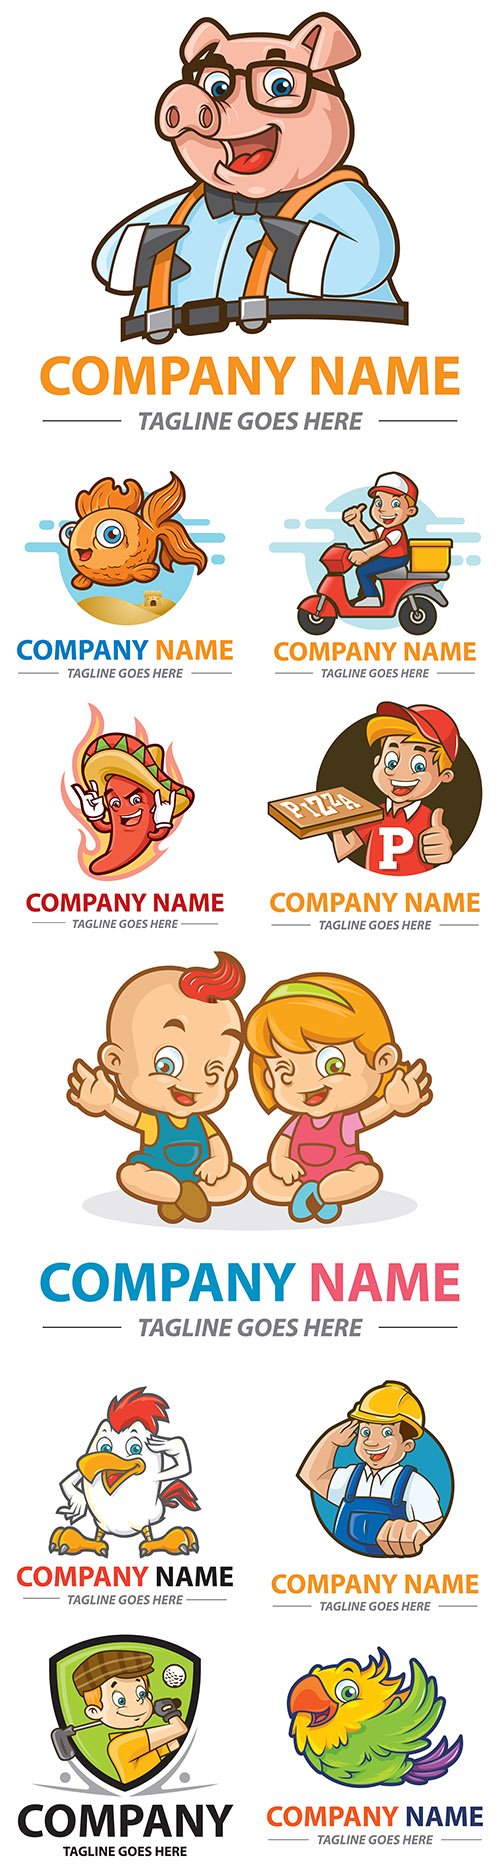 Brand name company logos business corporate design 4